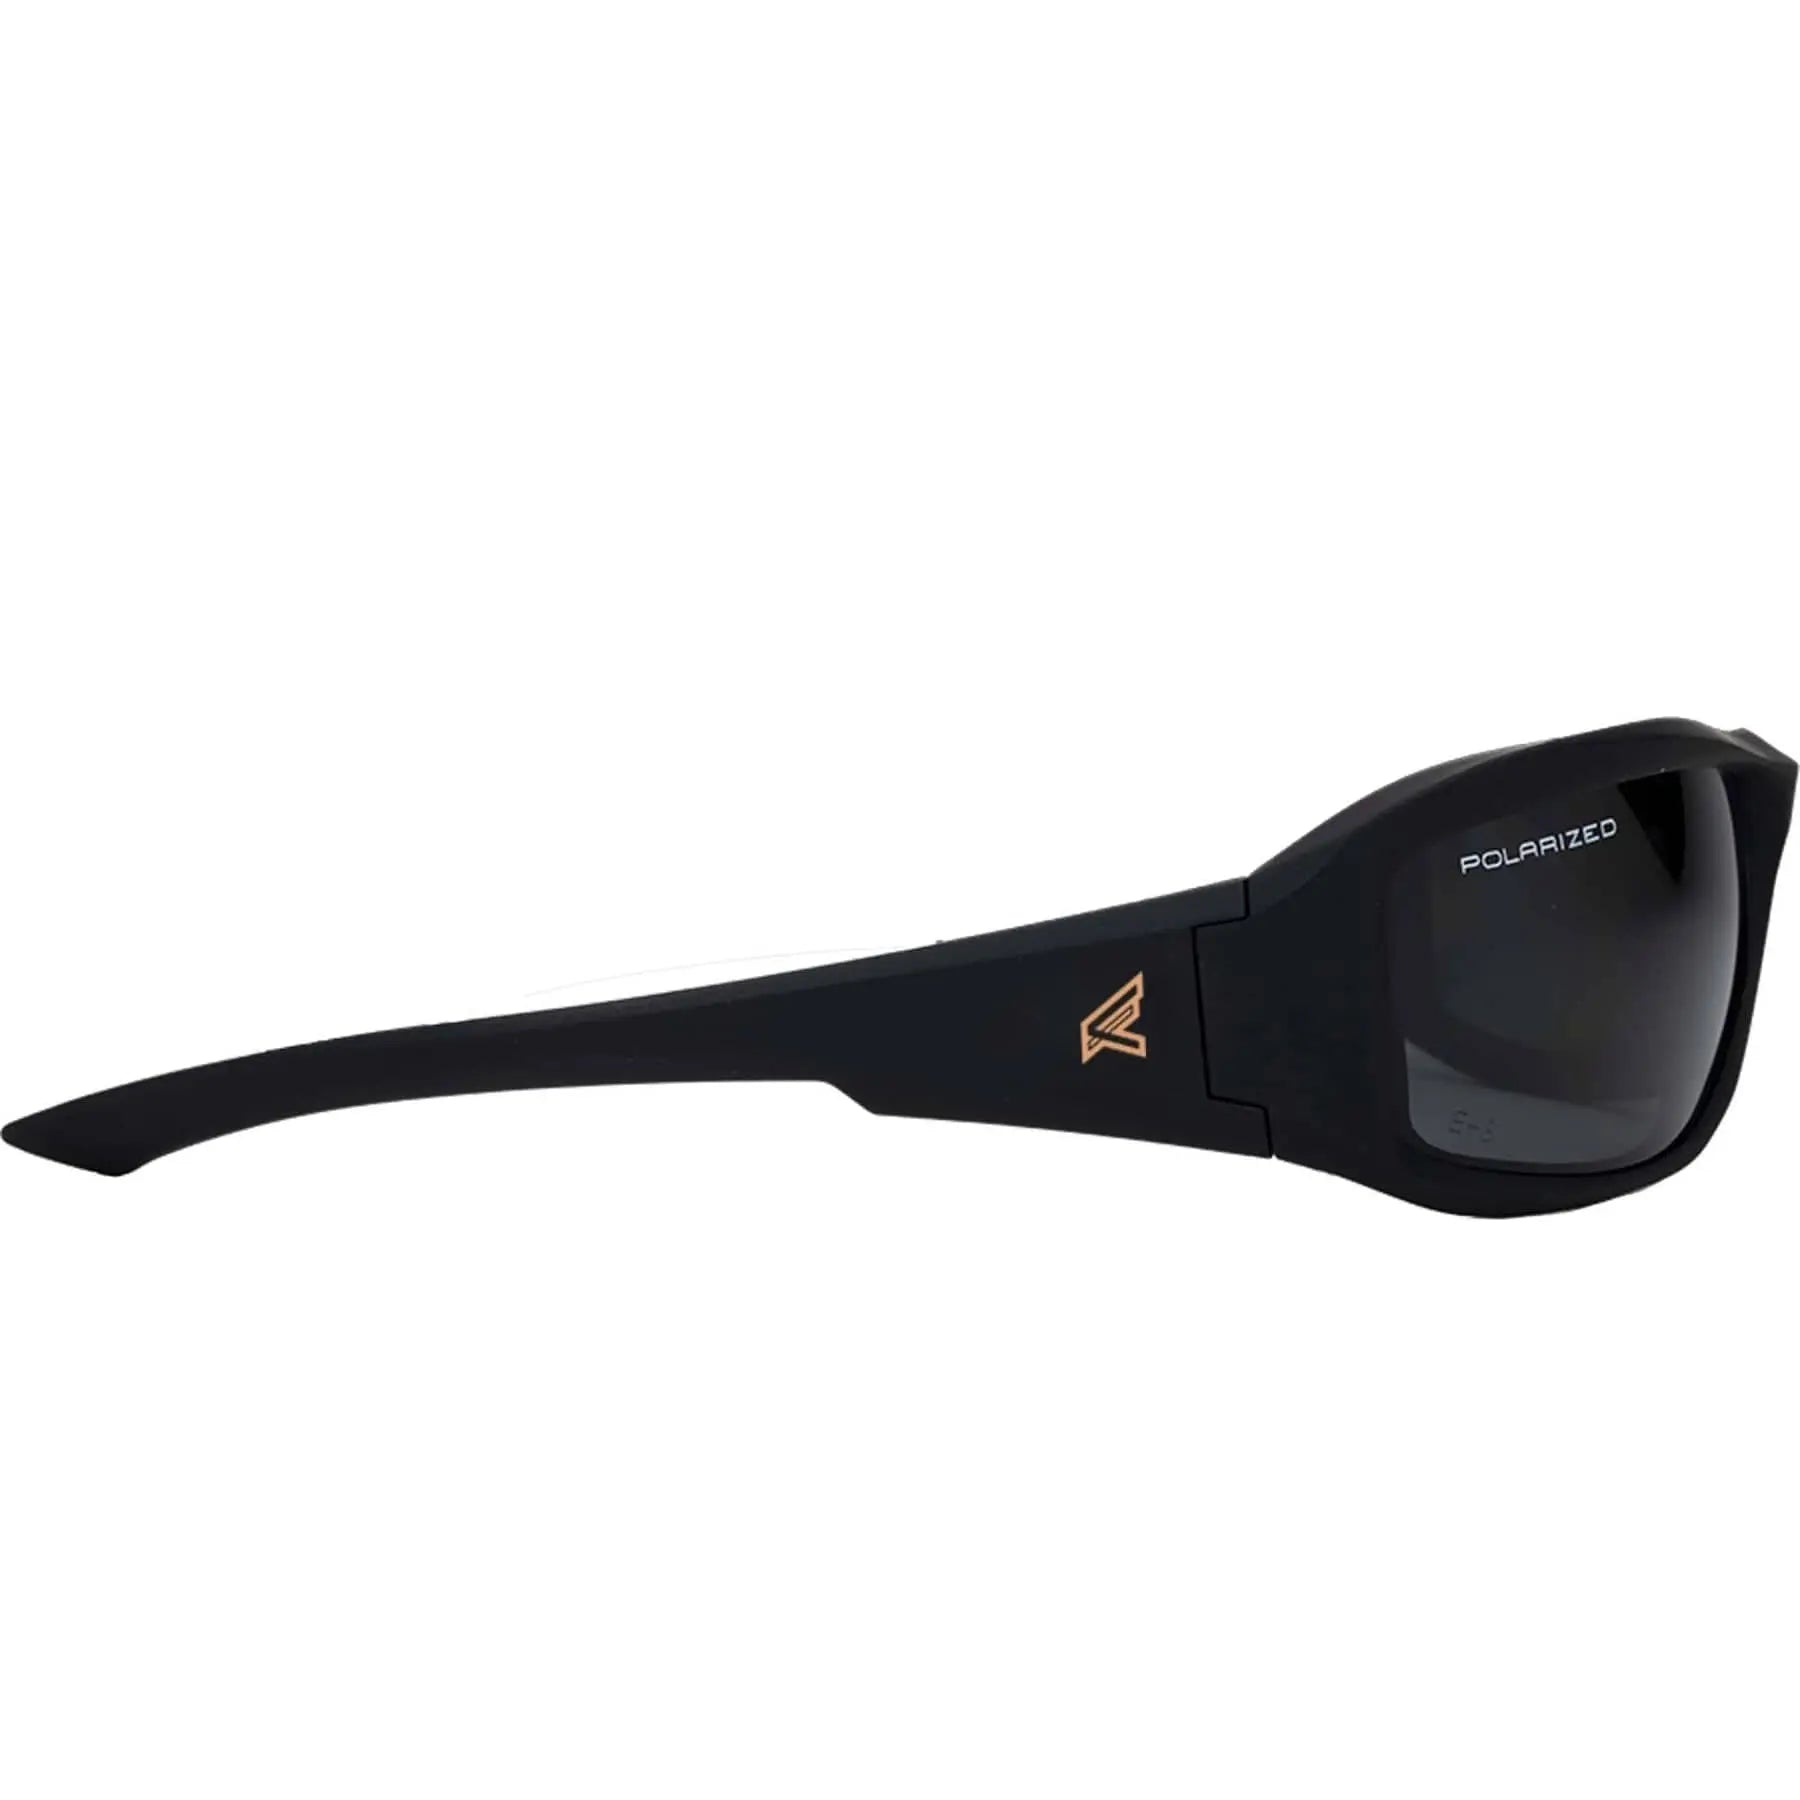 EDGE - Brazeau Polarized Safety Glasses, Matte Black/Smoke - Becker Safety and Supply